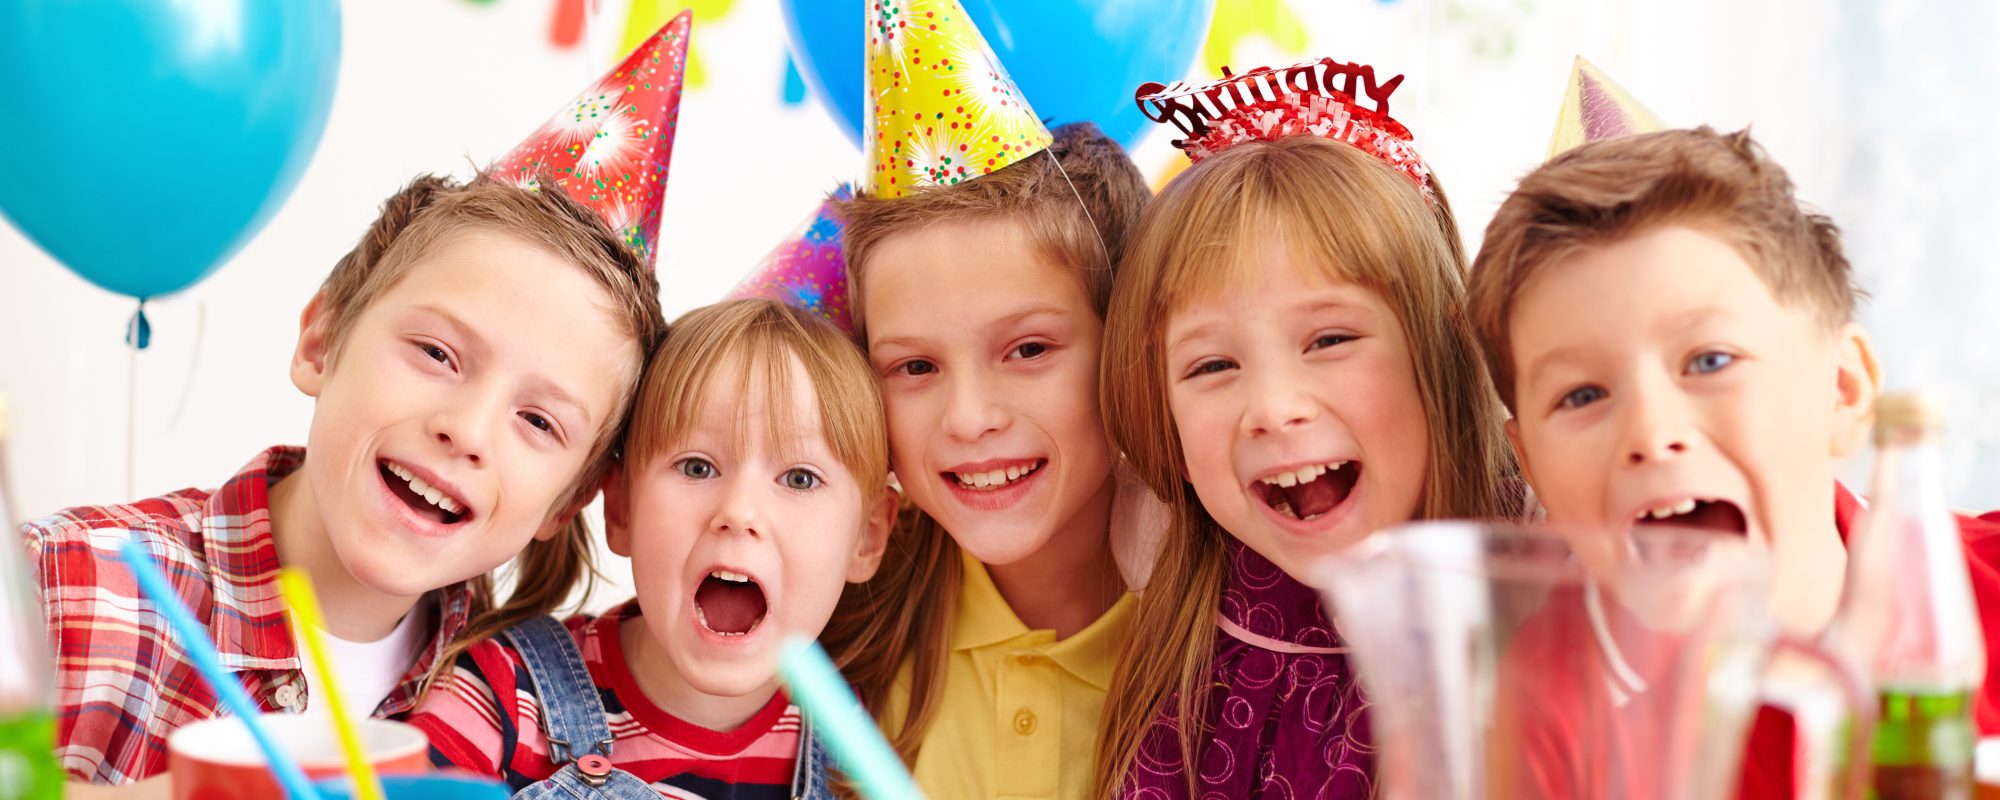 Group of adorable kids looking at camera at birthday party